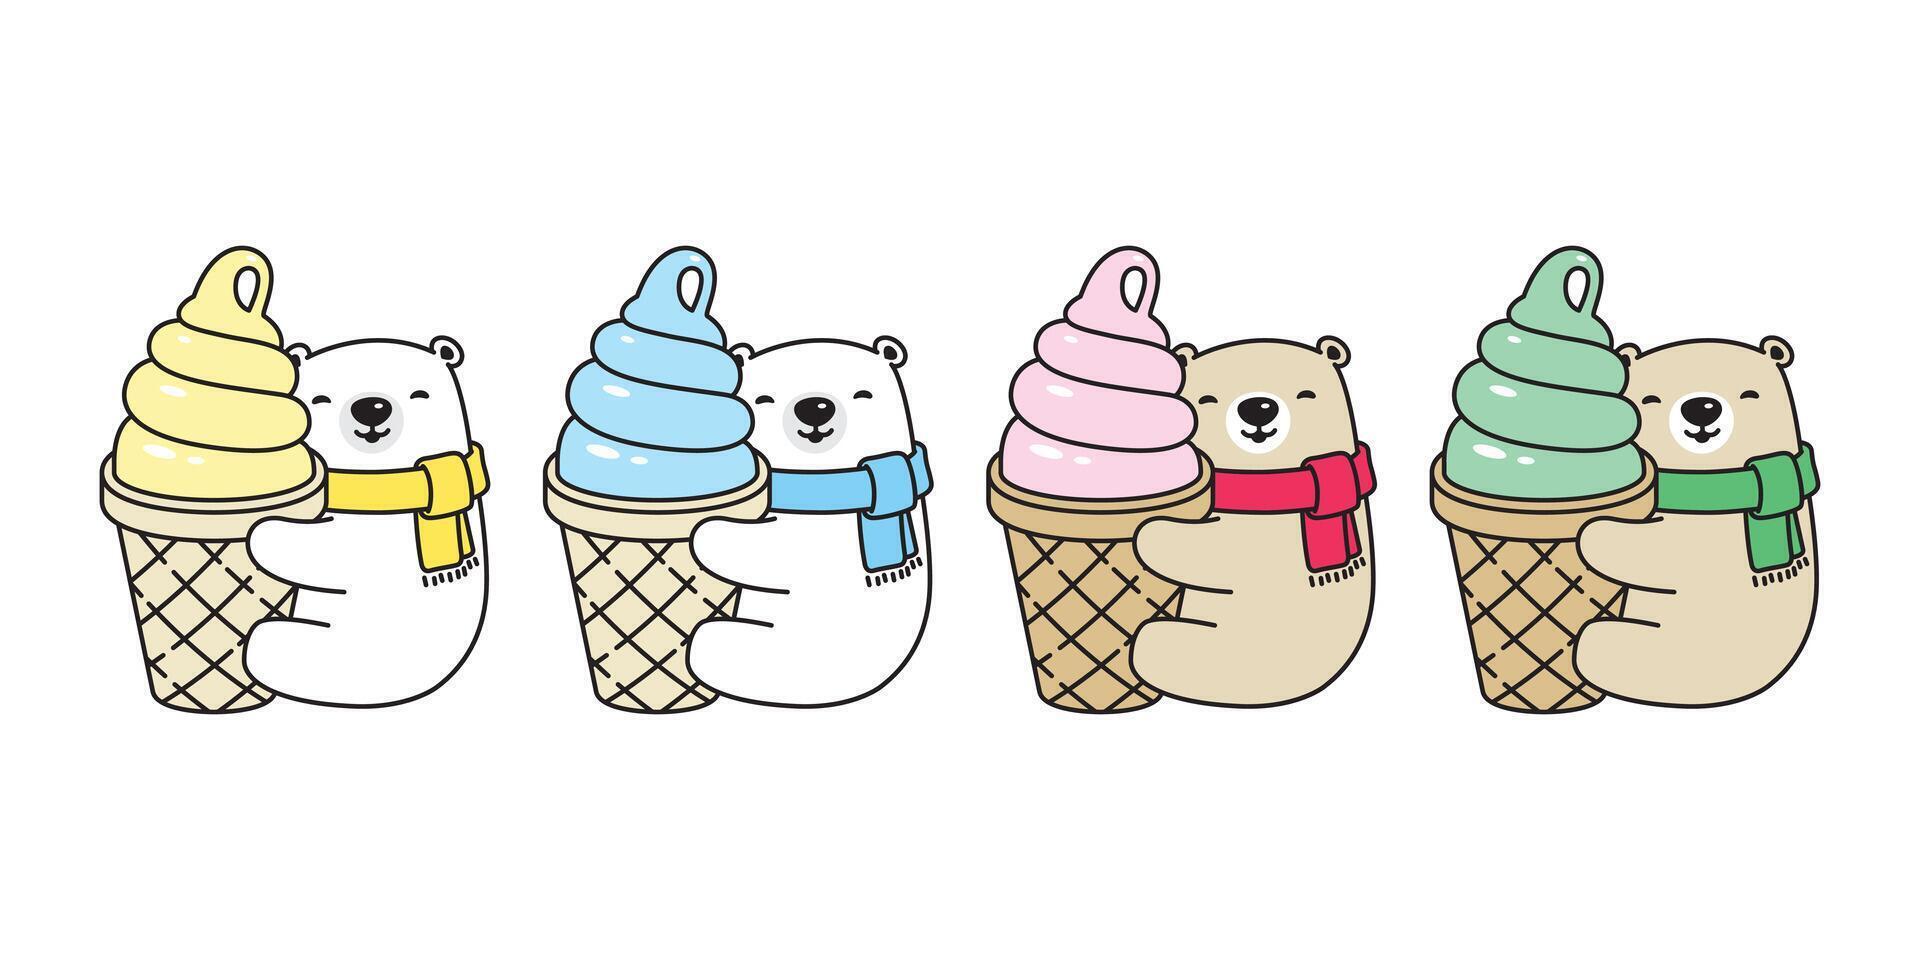 Bear polar bear ice cream cone icon logo teddy cartoon character pet symbol doodle illustration design vector